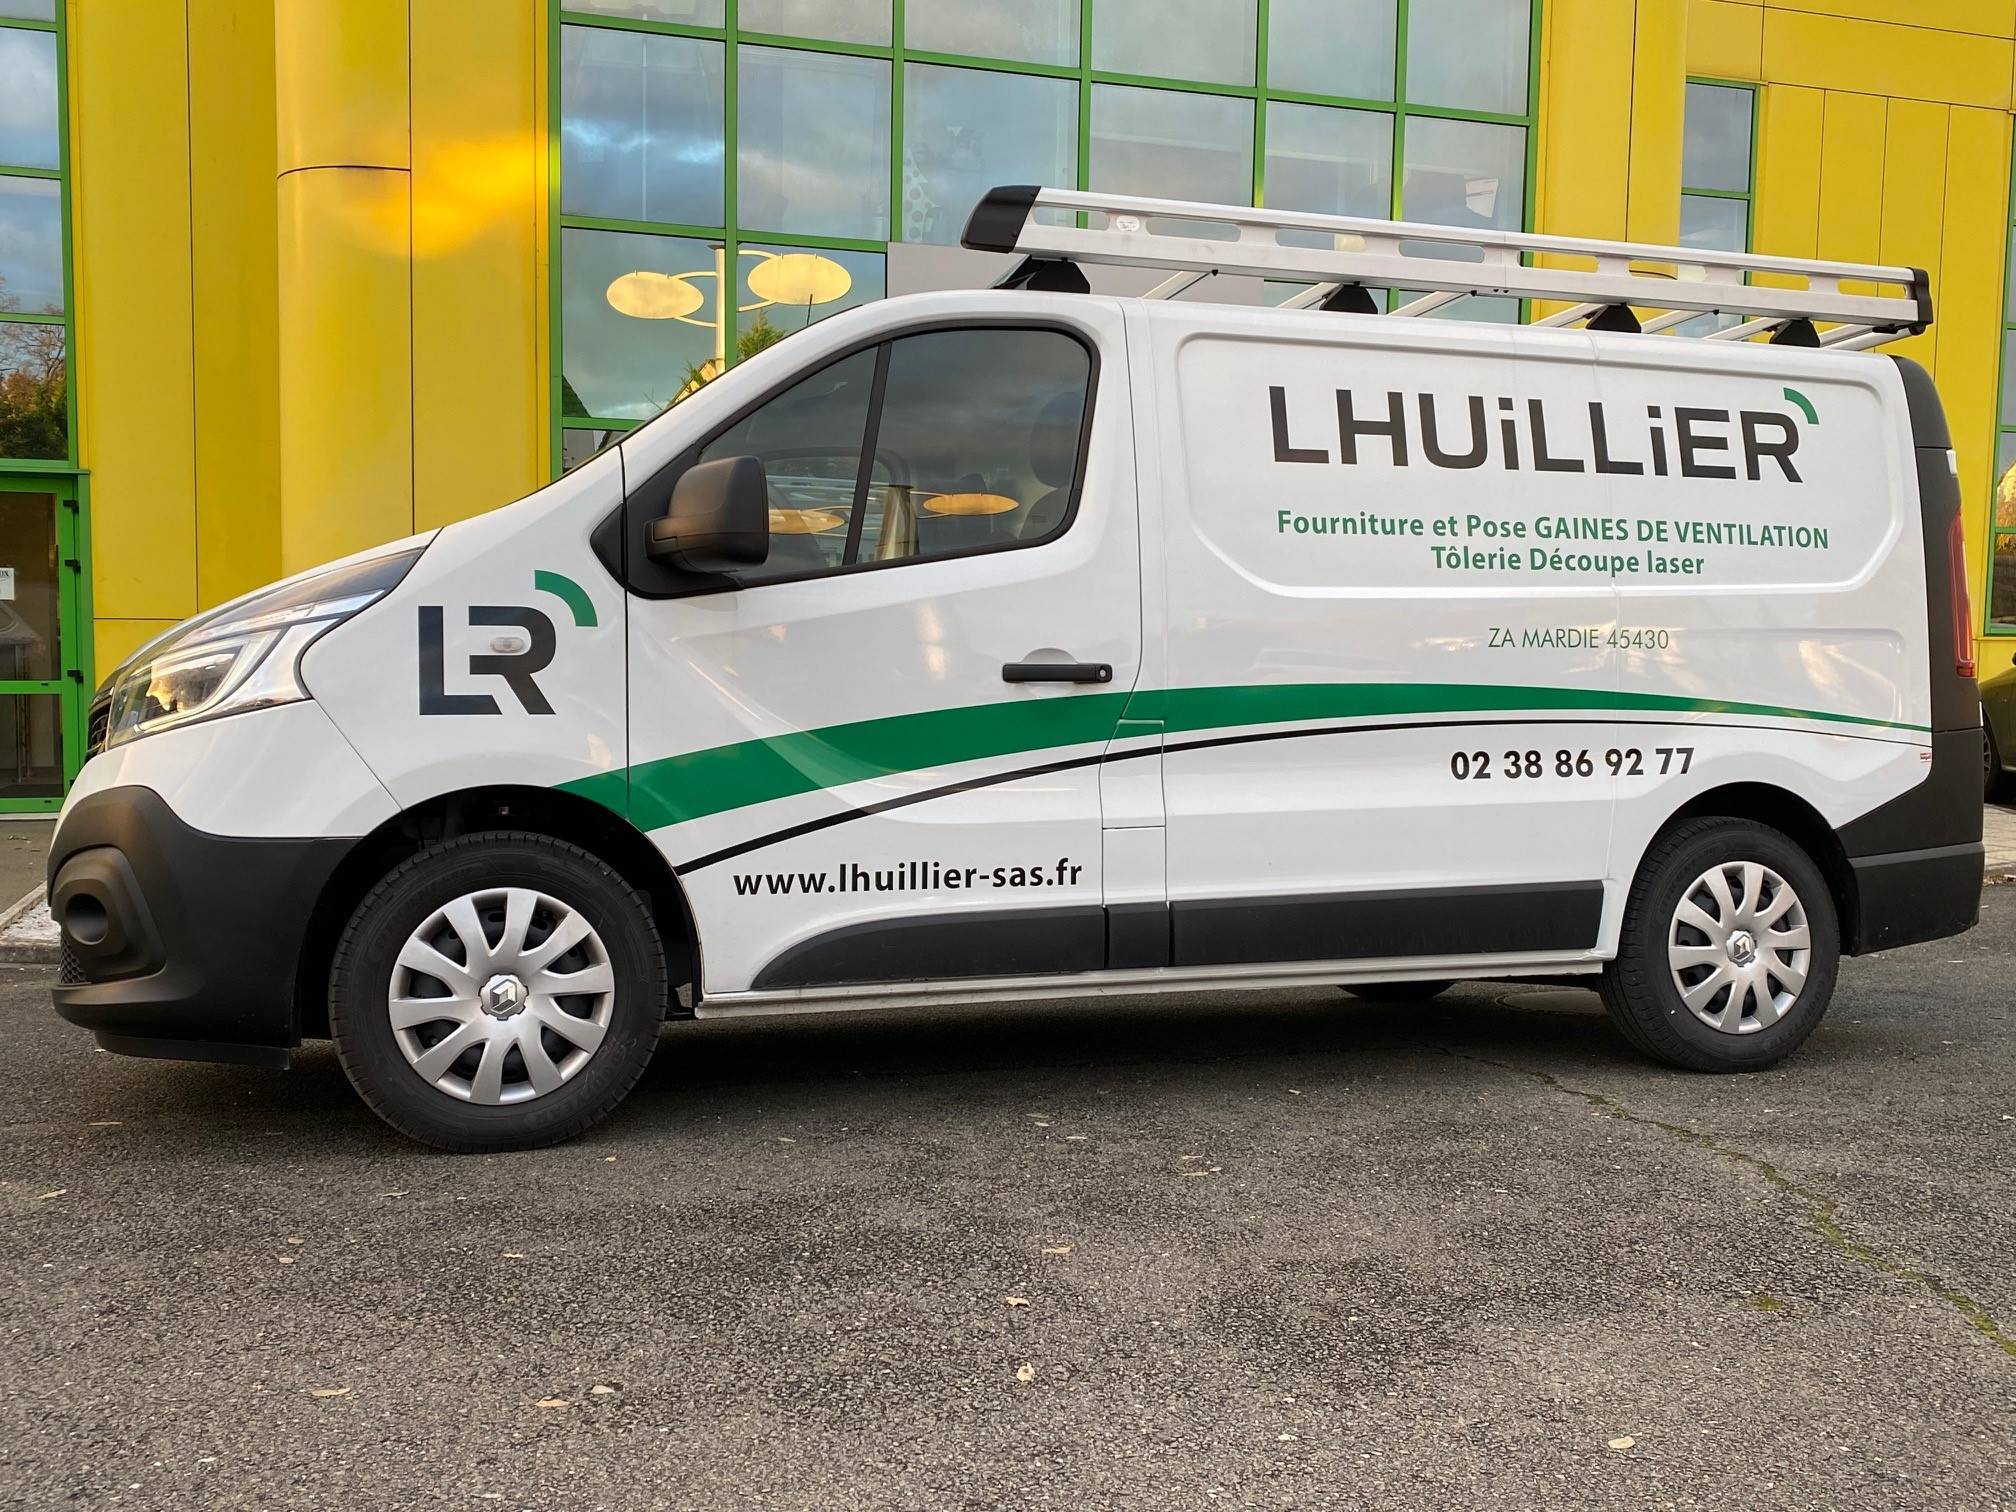 2021 - Lhuillier - Fabrication pose - Gaine ventilation - Véhicule traffic